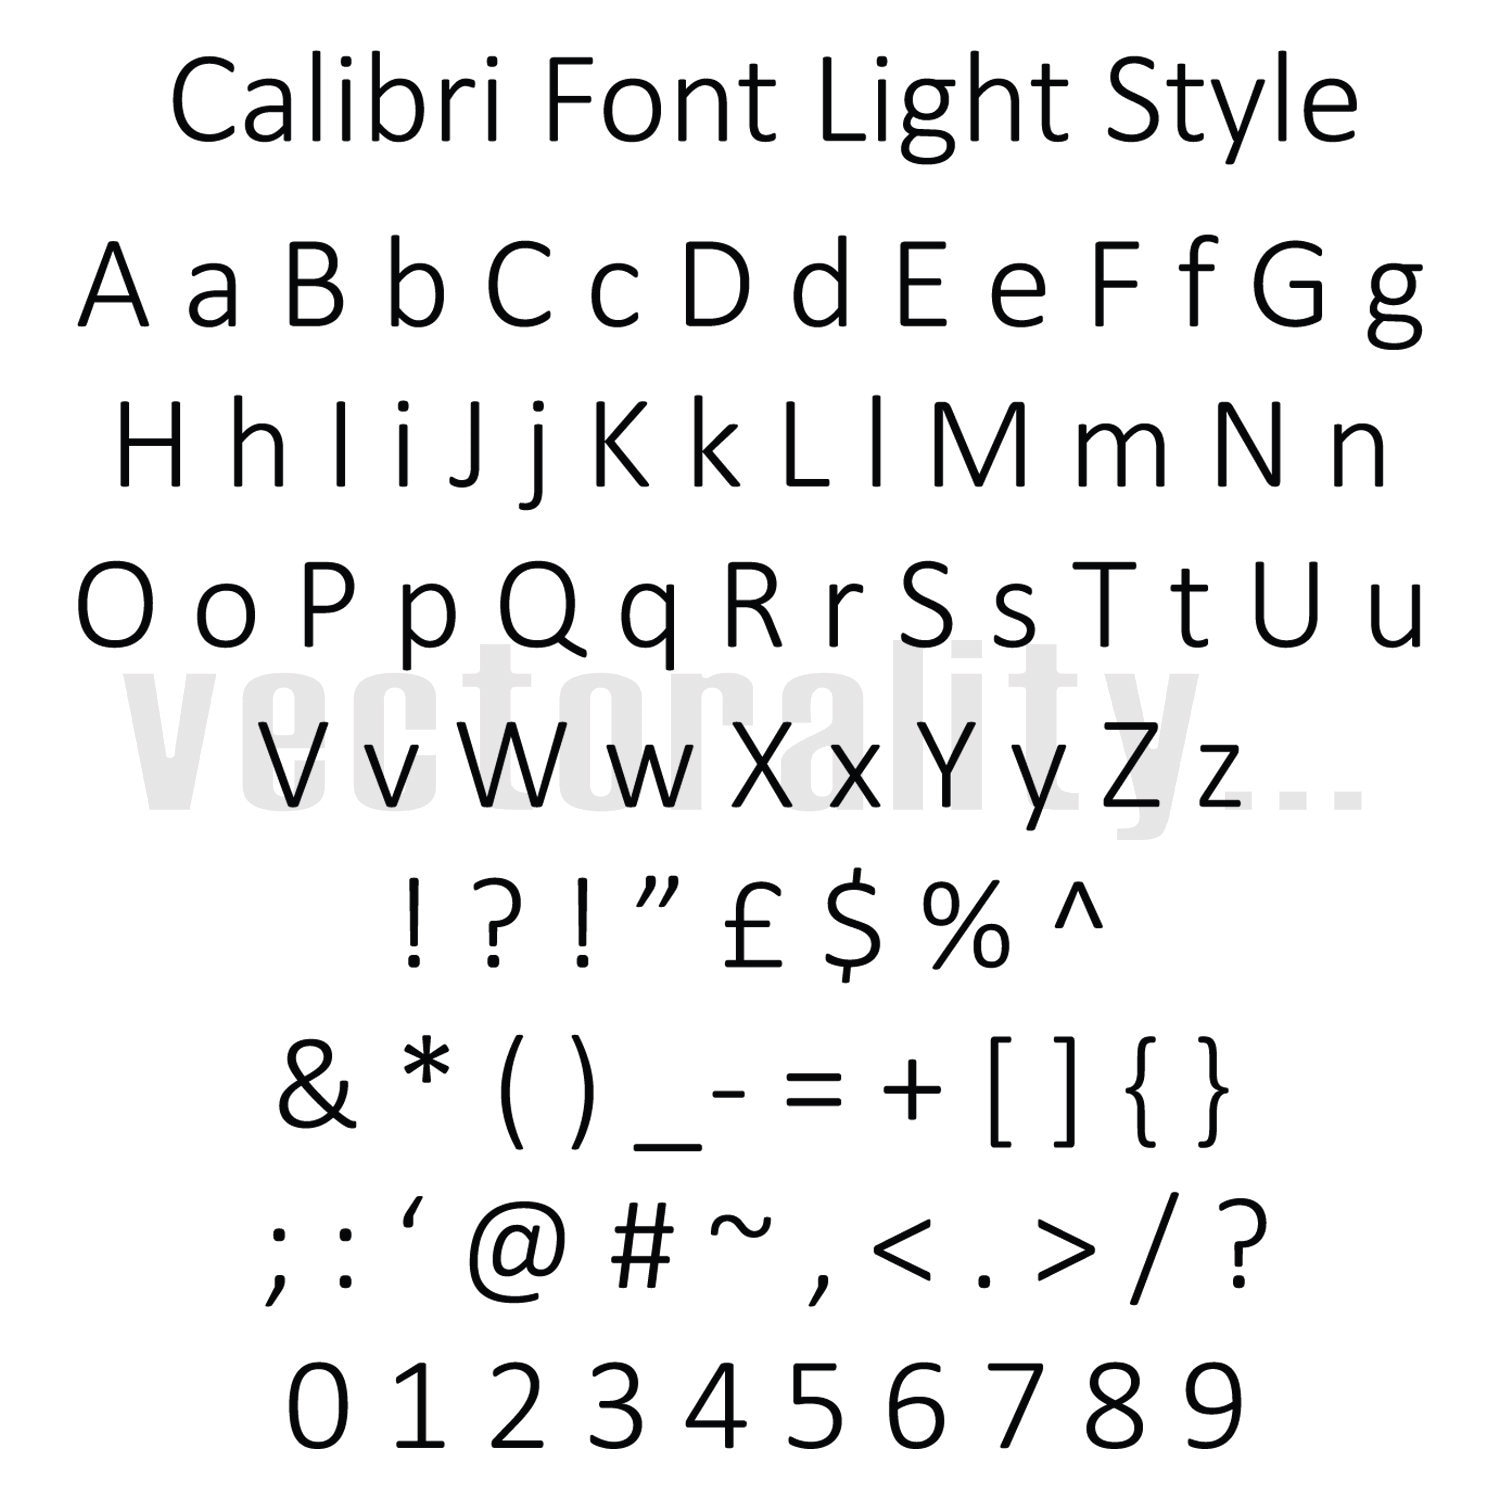 Calibri Font Light Style Art - Etsy